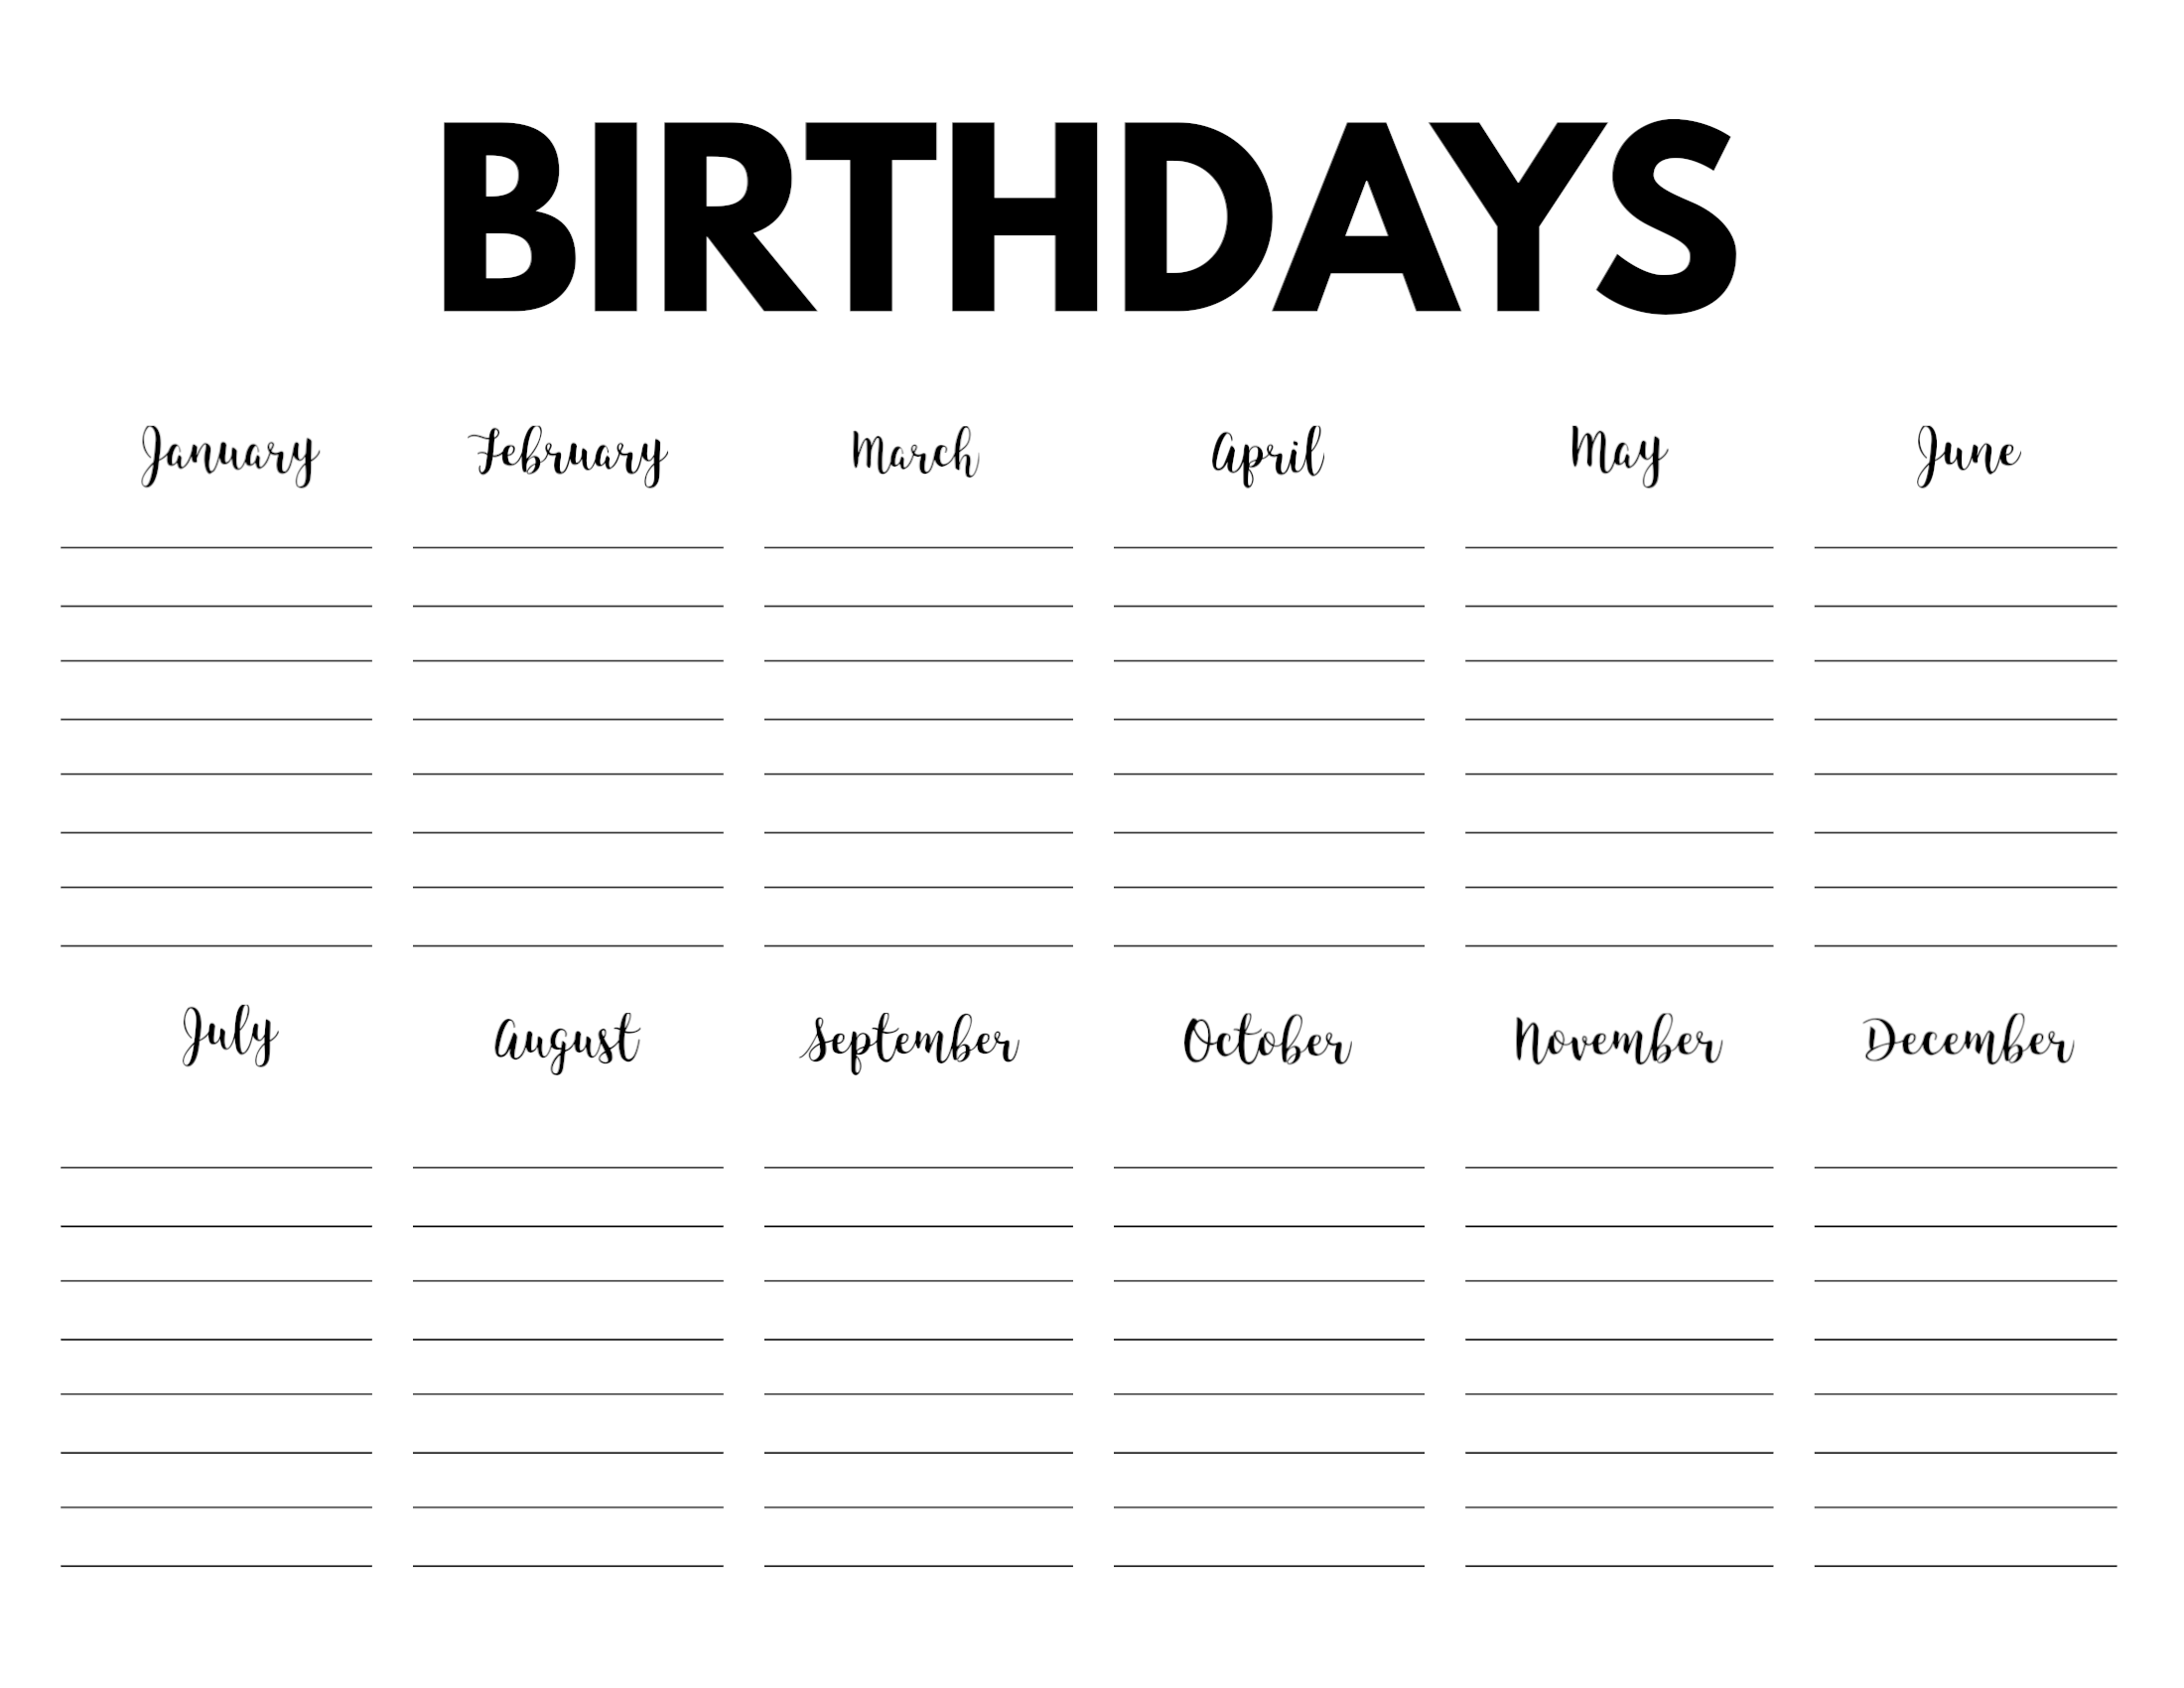 free calendar template for birthdays 21